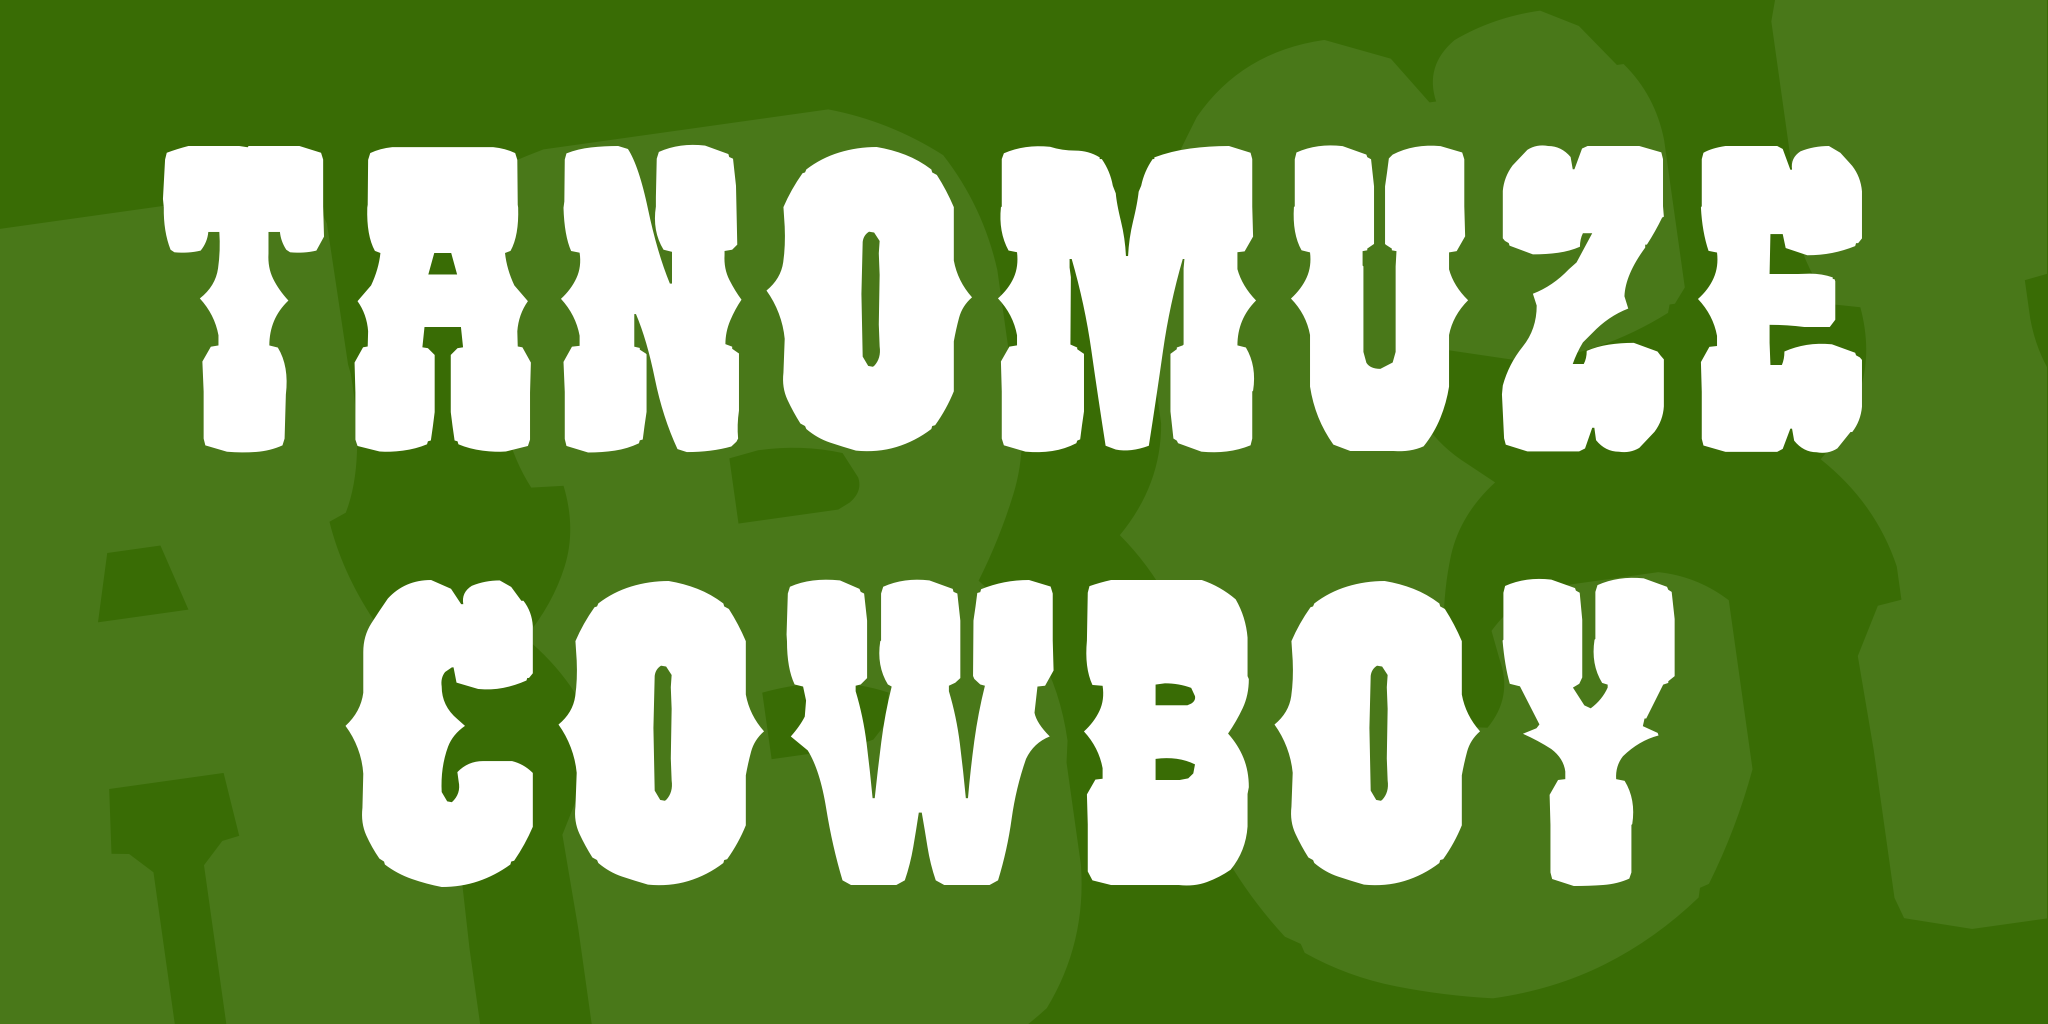 Tanomuze Cowboy